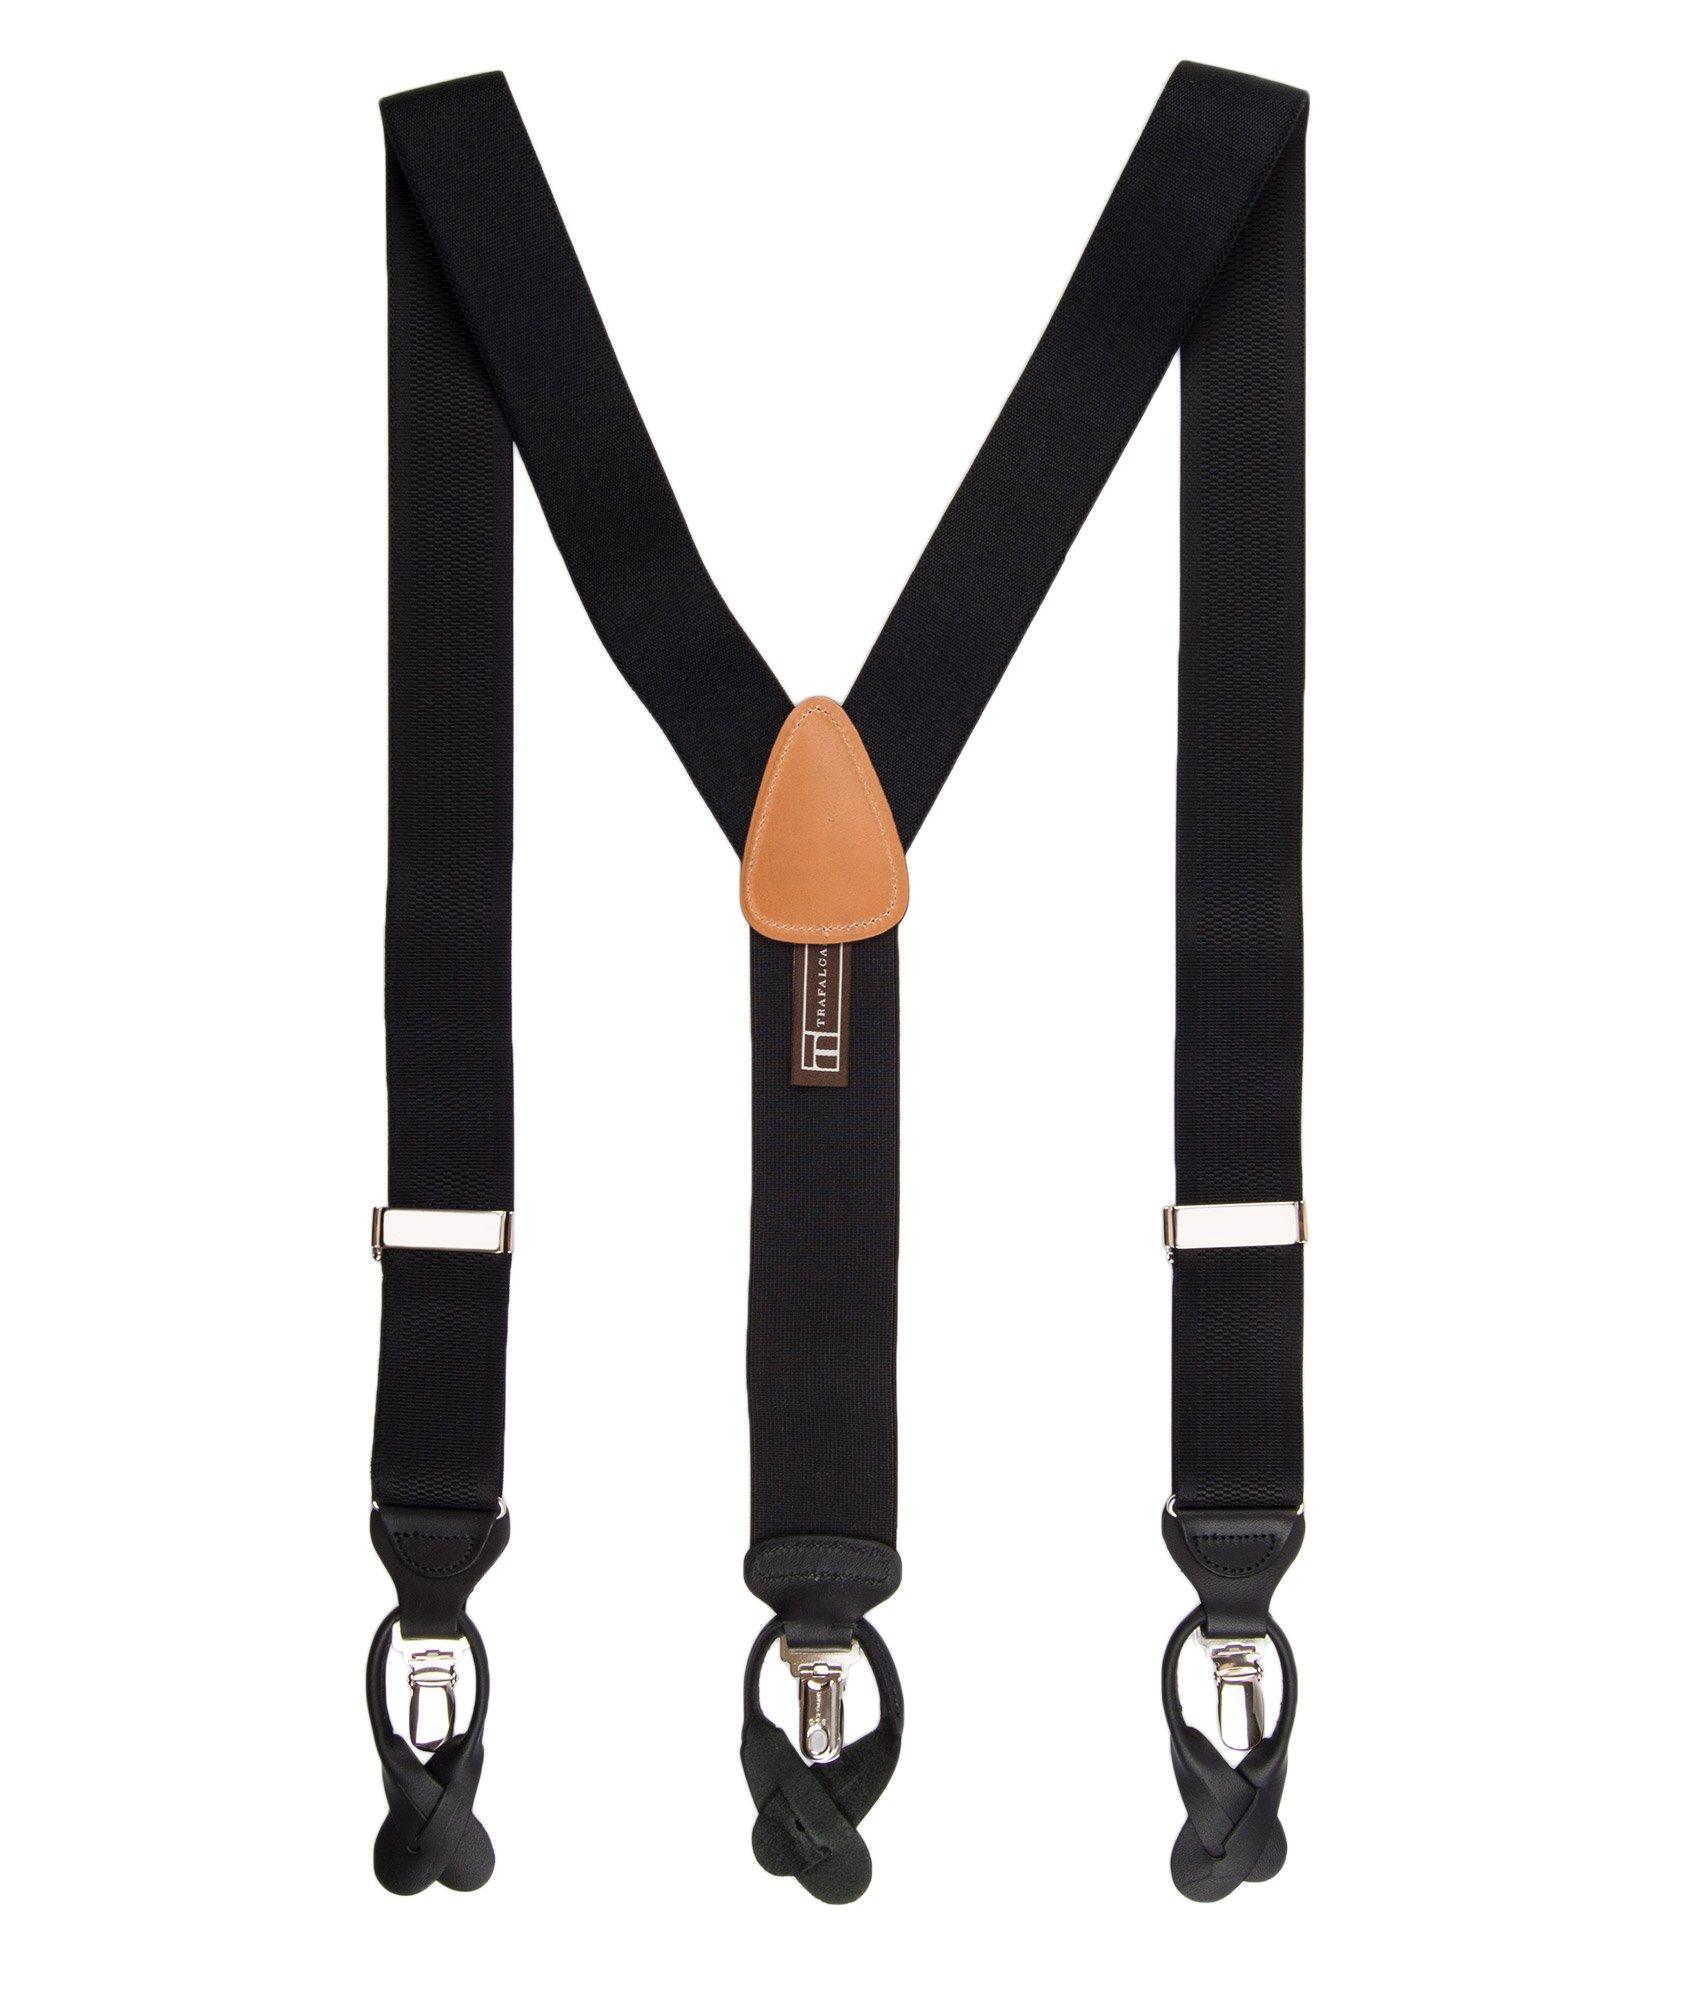 Stretch Suspenders image 0